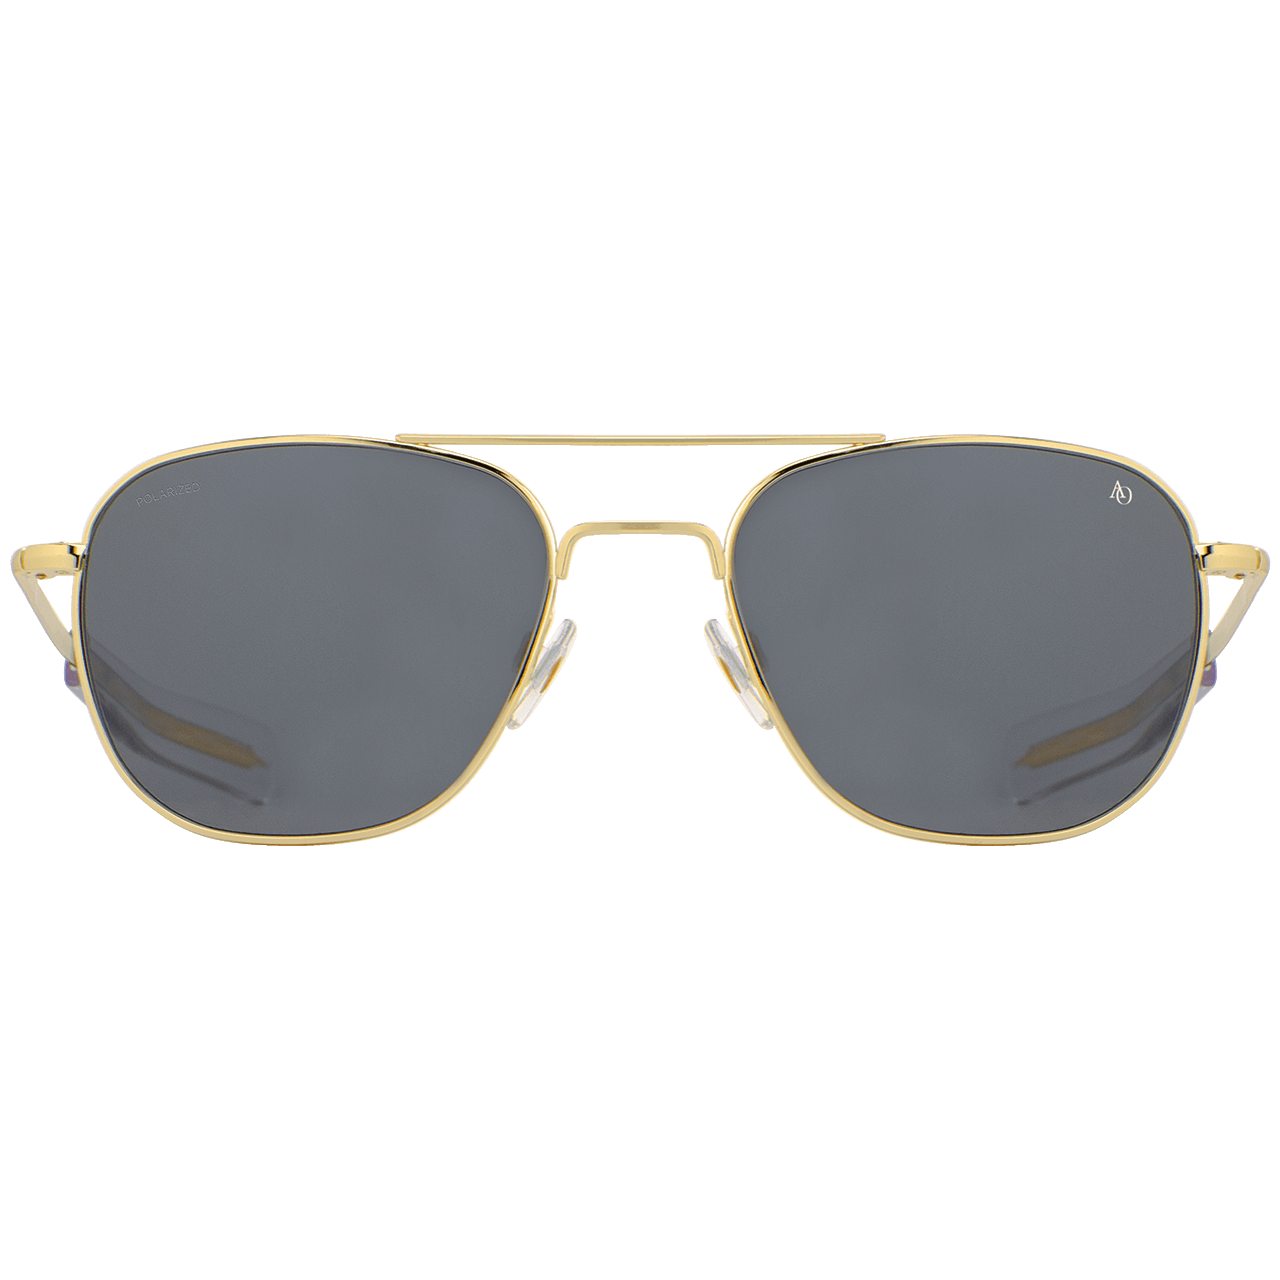 Original aviator-style gold-tone sunglasses